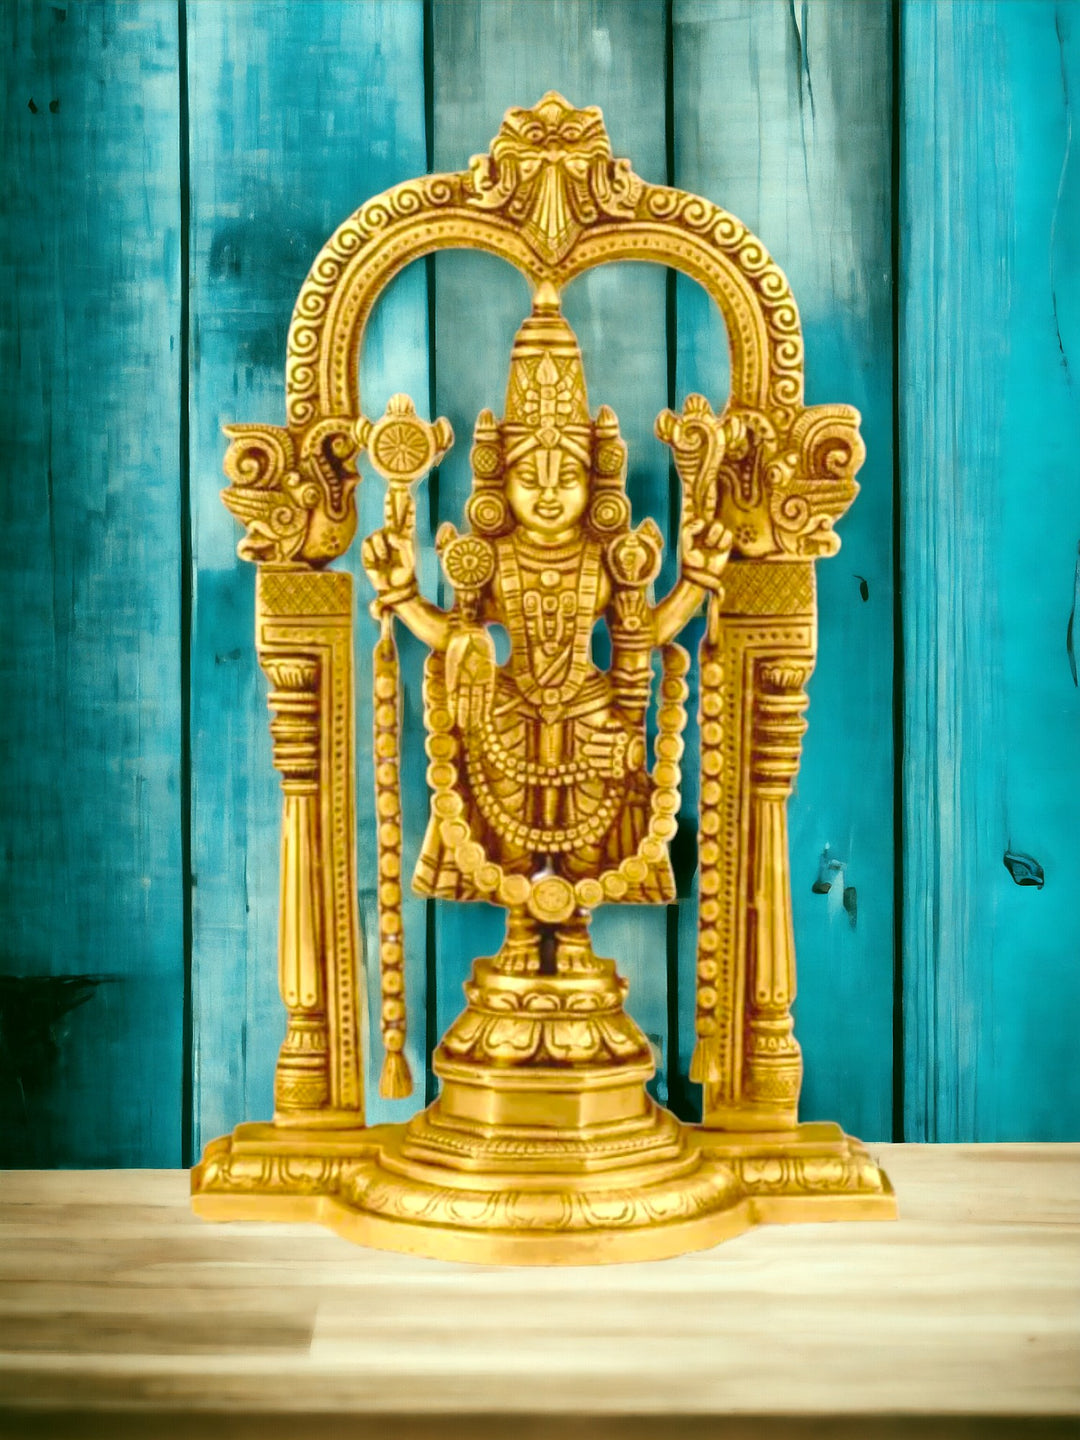 Tamas Brass Tirupati Bala Ji Statue (14 Inches)